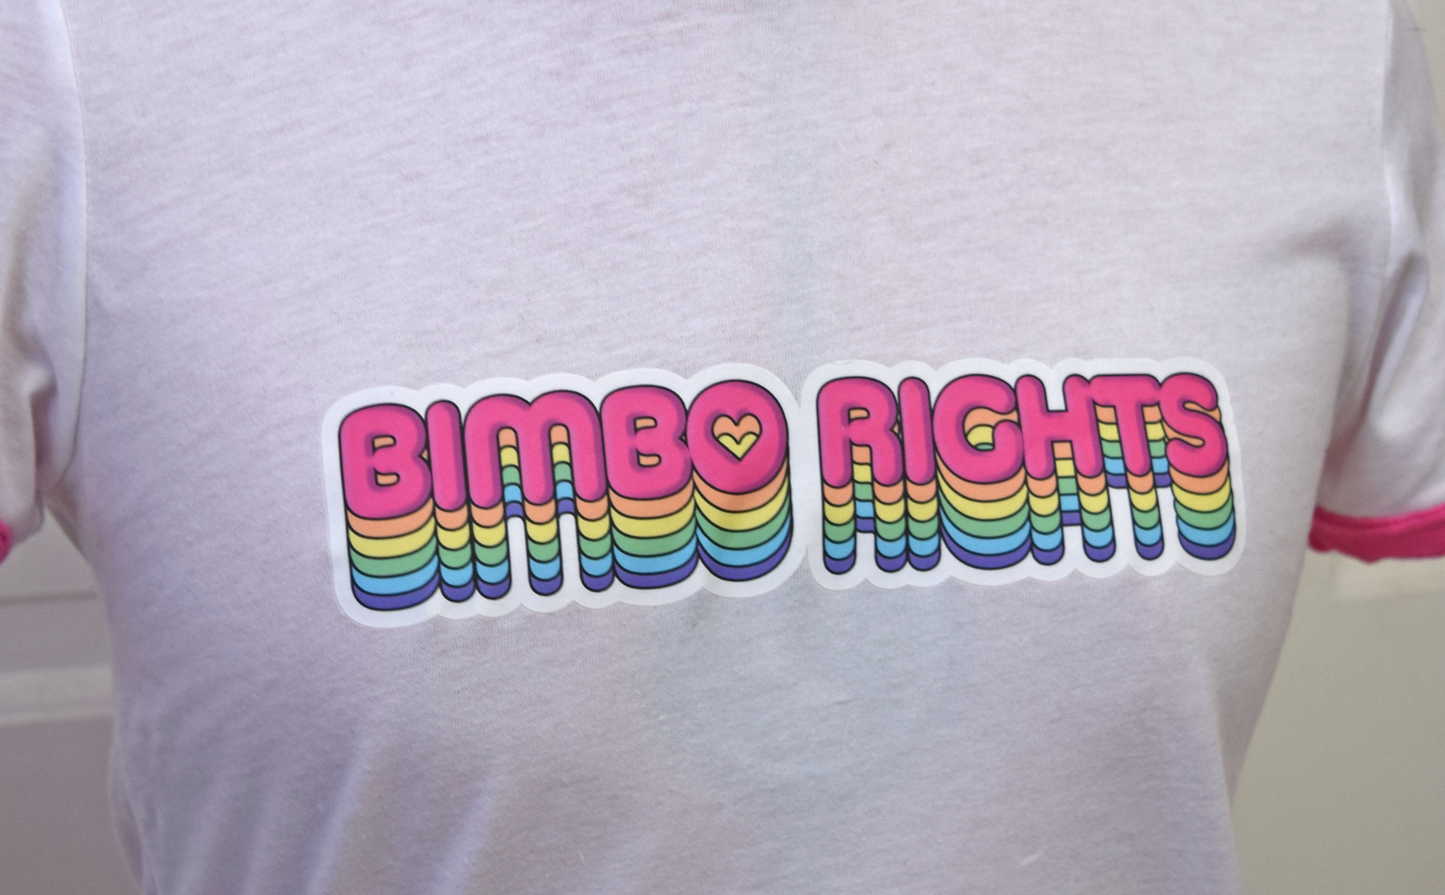 Bimbo Rights - Unisex Shirt